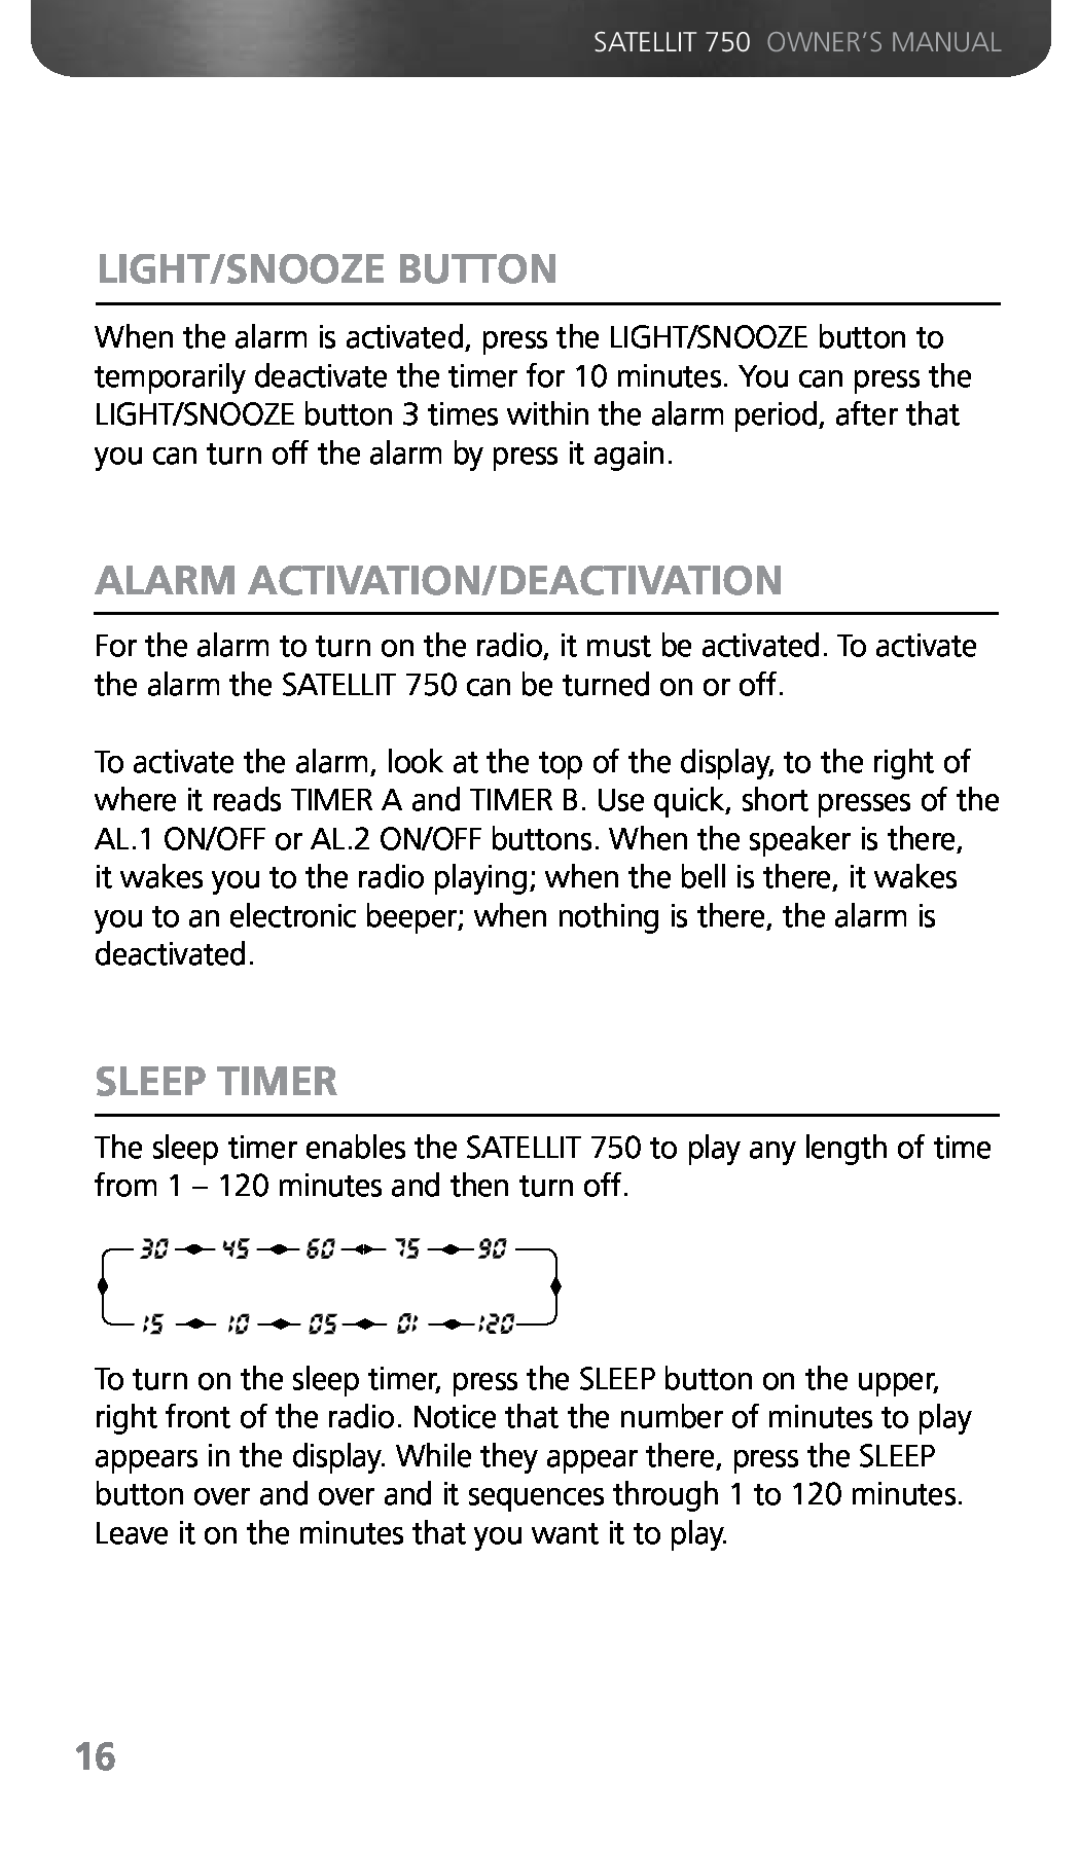 Grundig 750 owner manual Light/Snooze Button, Alarm Activation/Deactivation, Sleep Timer 